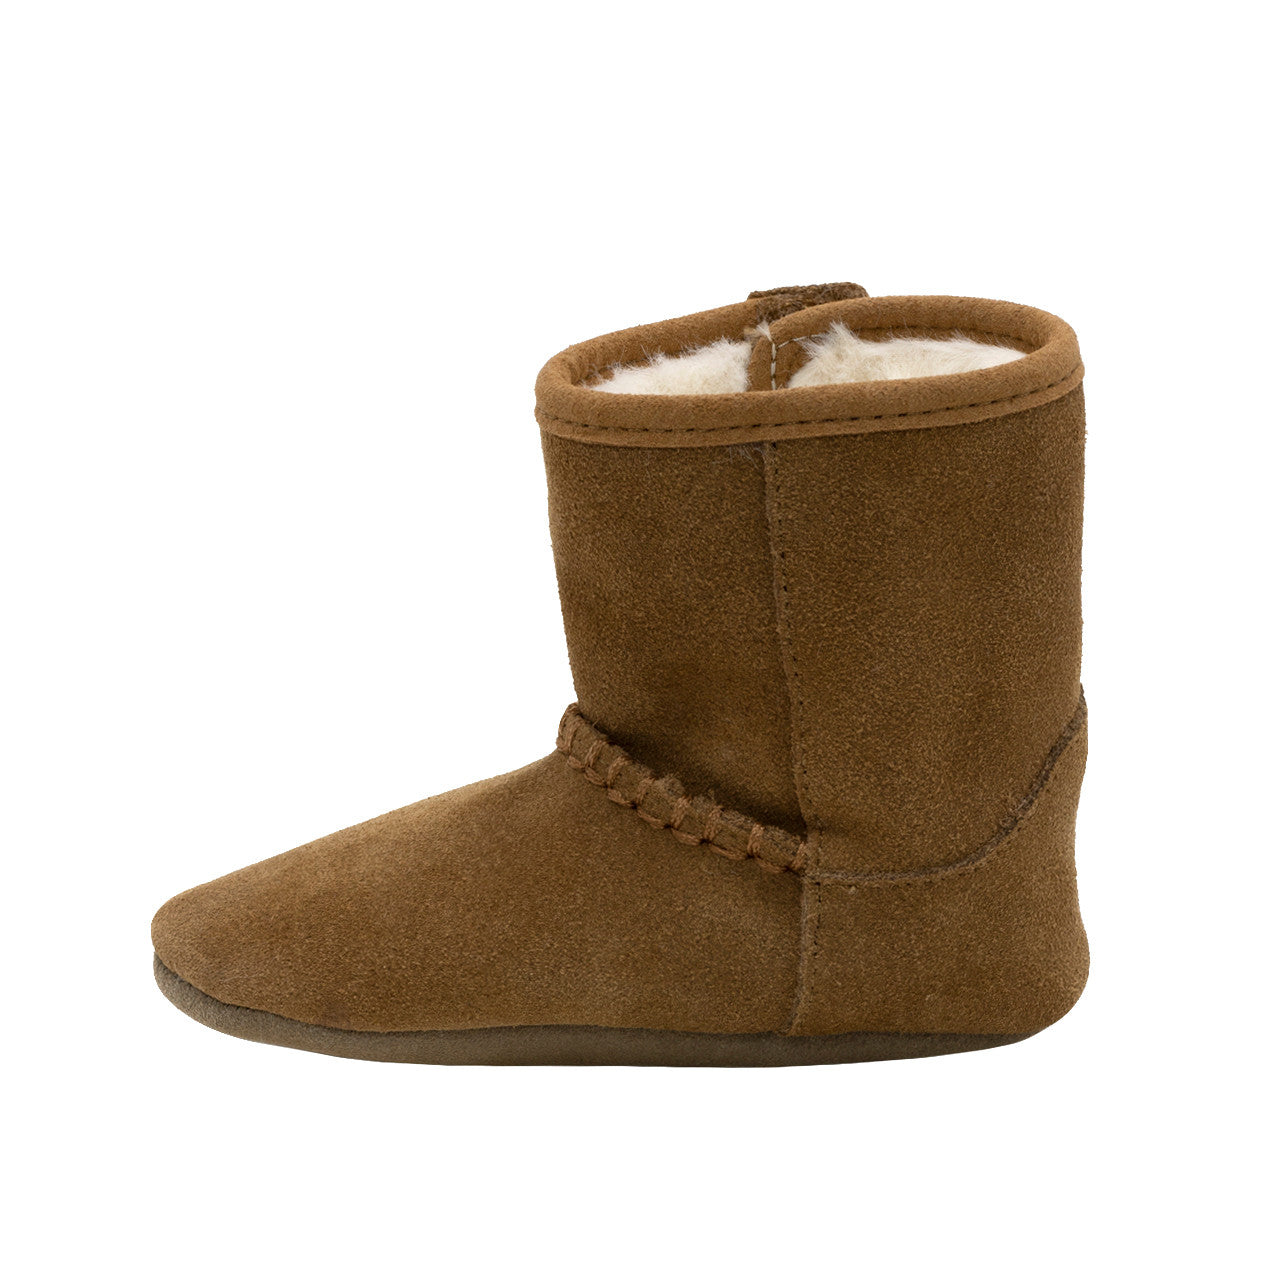 Tyler Soft Sole Boots in Camel  - Doodlebug's Children's Boutique